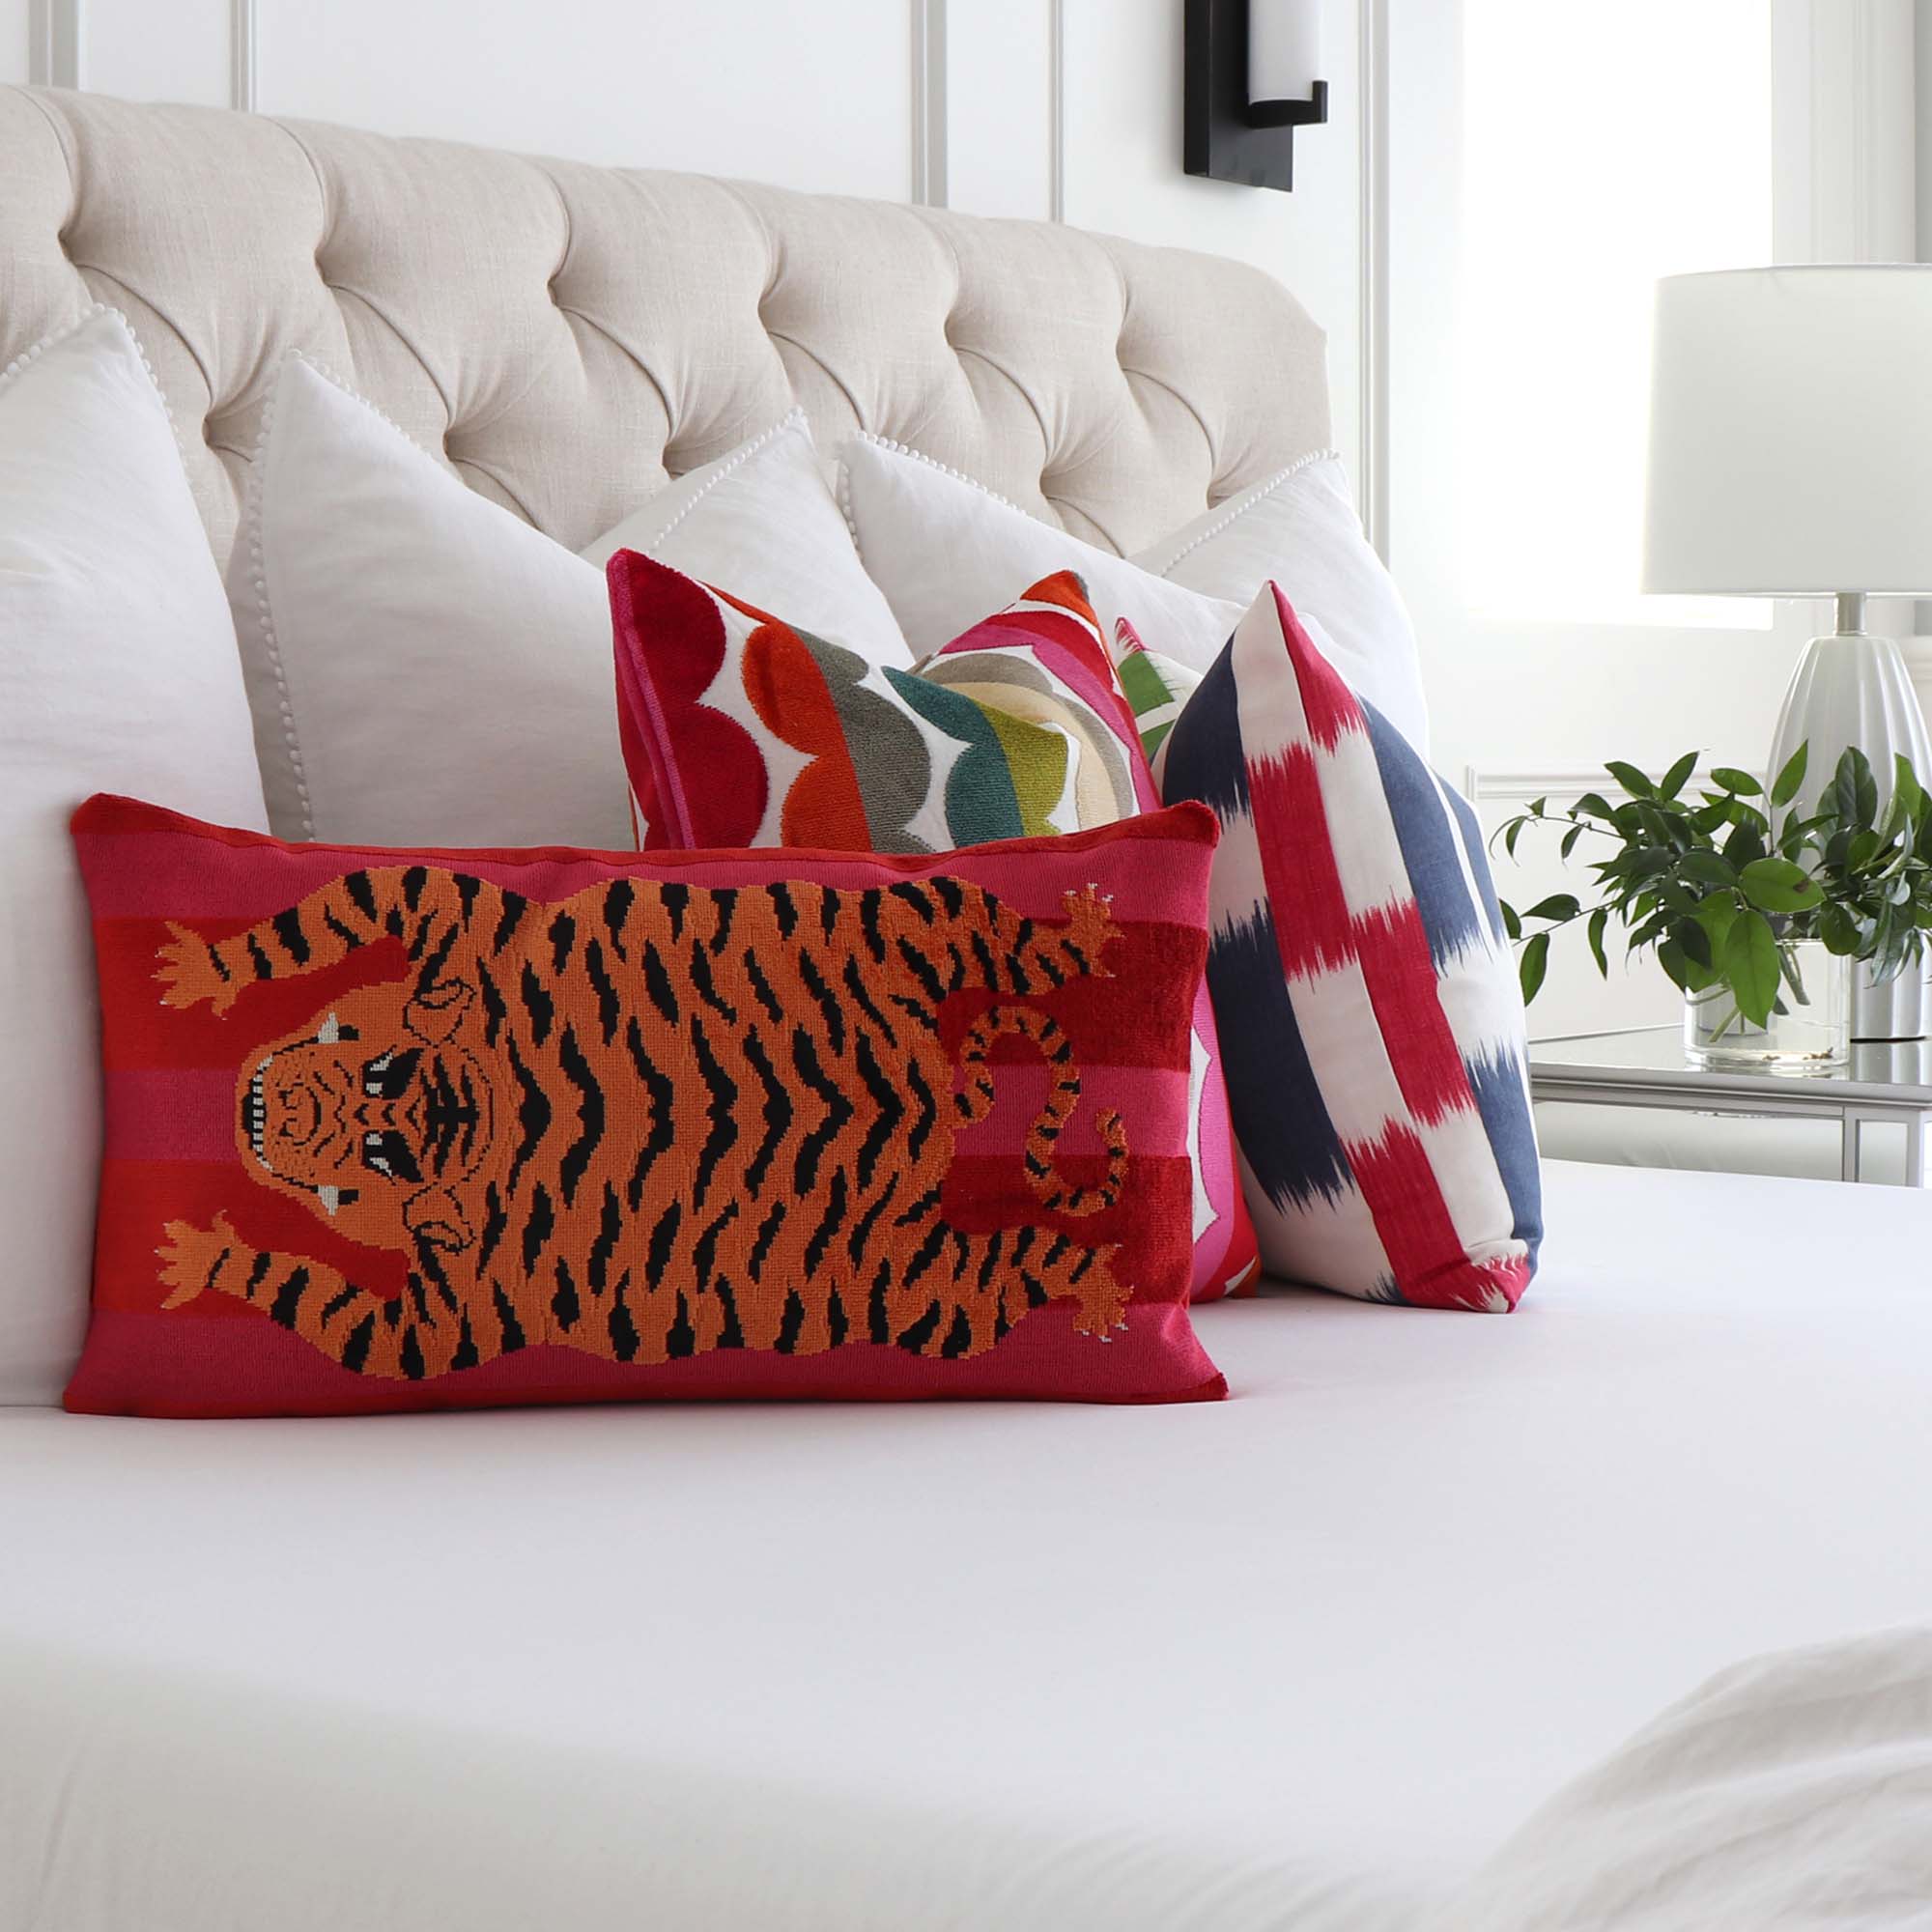 Schumacher Jokhang Tiger Velvet Red and Pink Luxury Designer Throw Pillows Left Facing Tiger